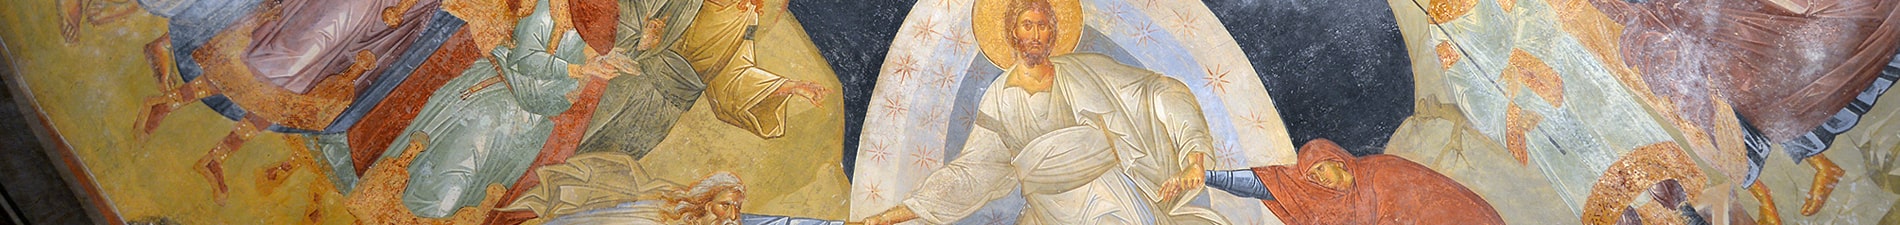 Jesus Christ Christian Icons